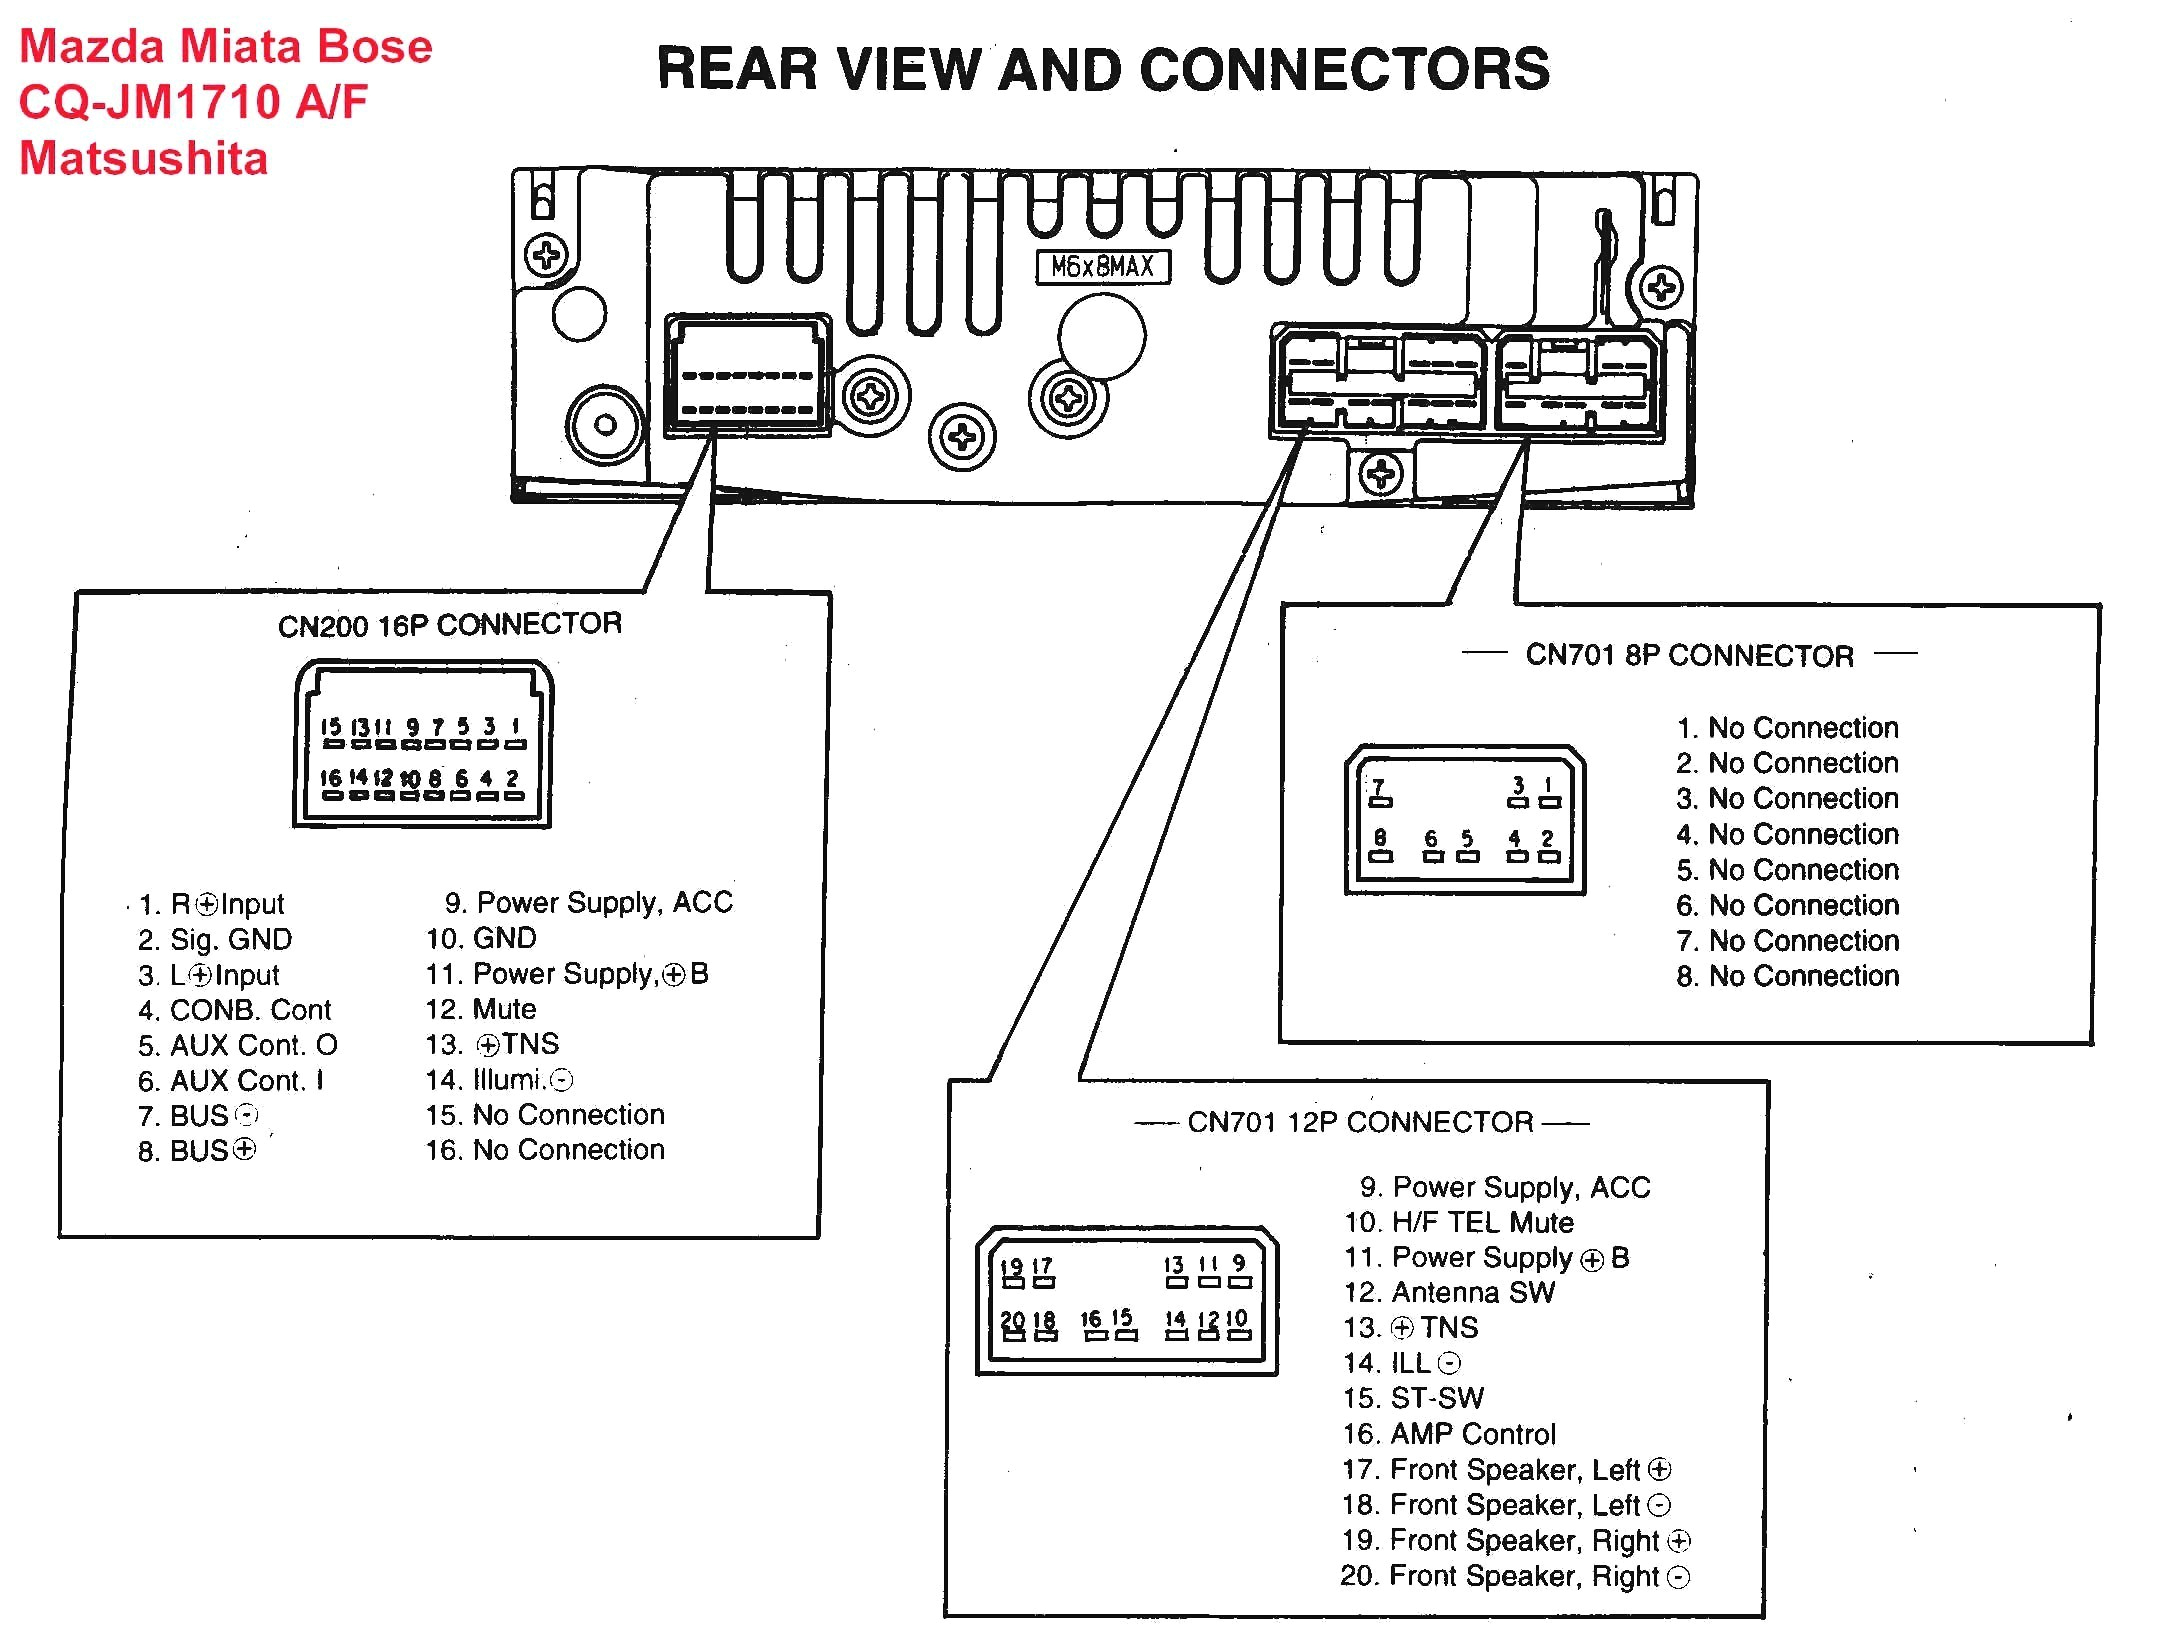 pioneer car stereo wiring diagram deh p3100 unique pioneer deh p3100 wiring diagram wiring diagram g11 of pioneer car stereo wiring diagram deh p3100 jpg